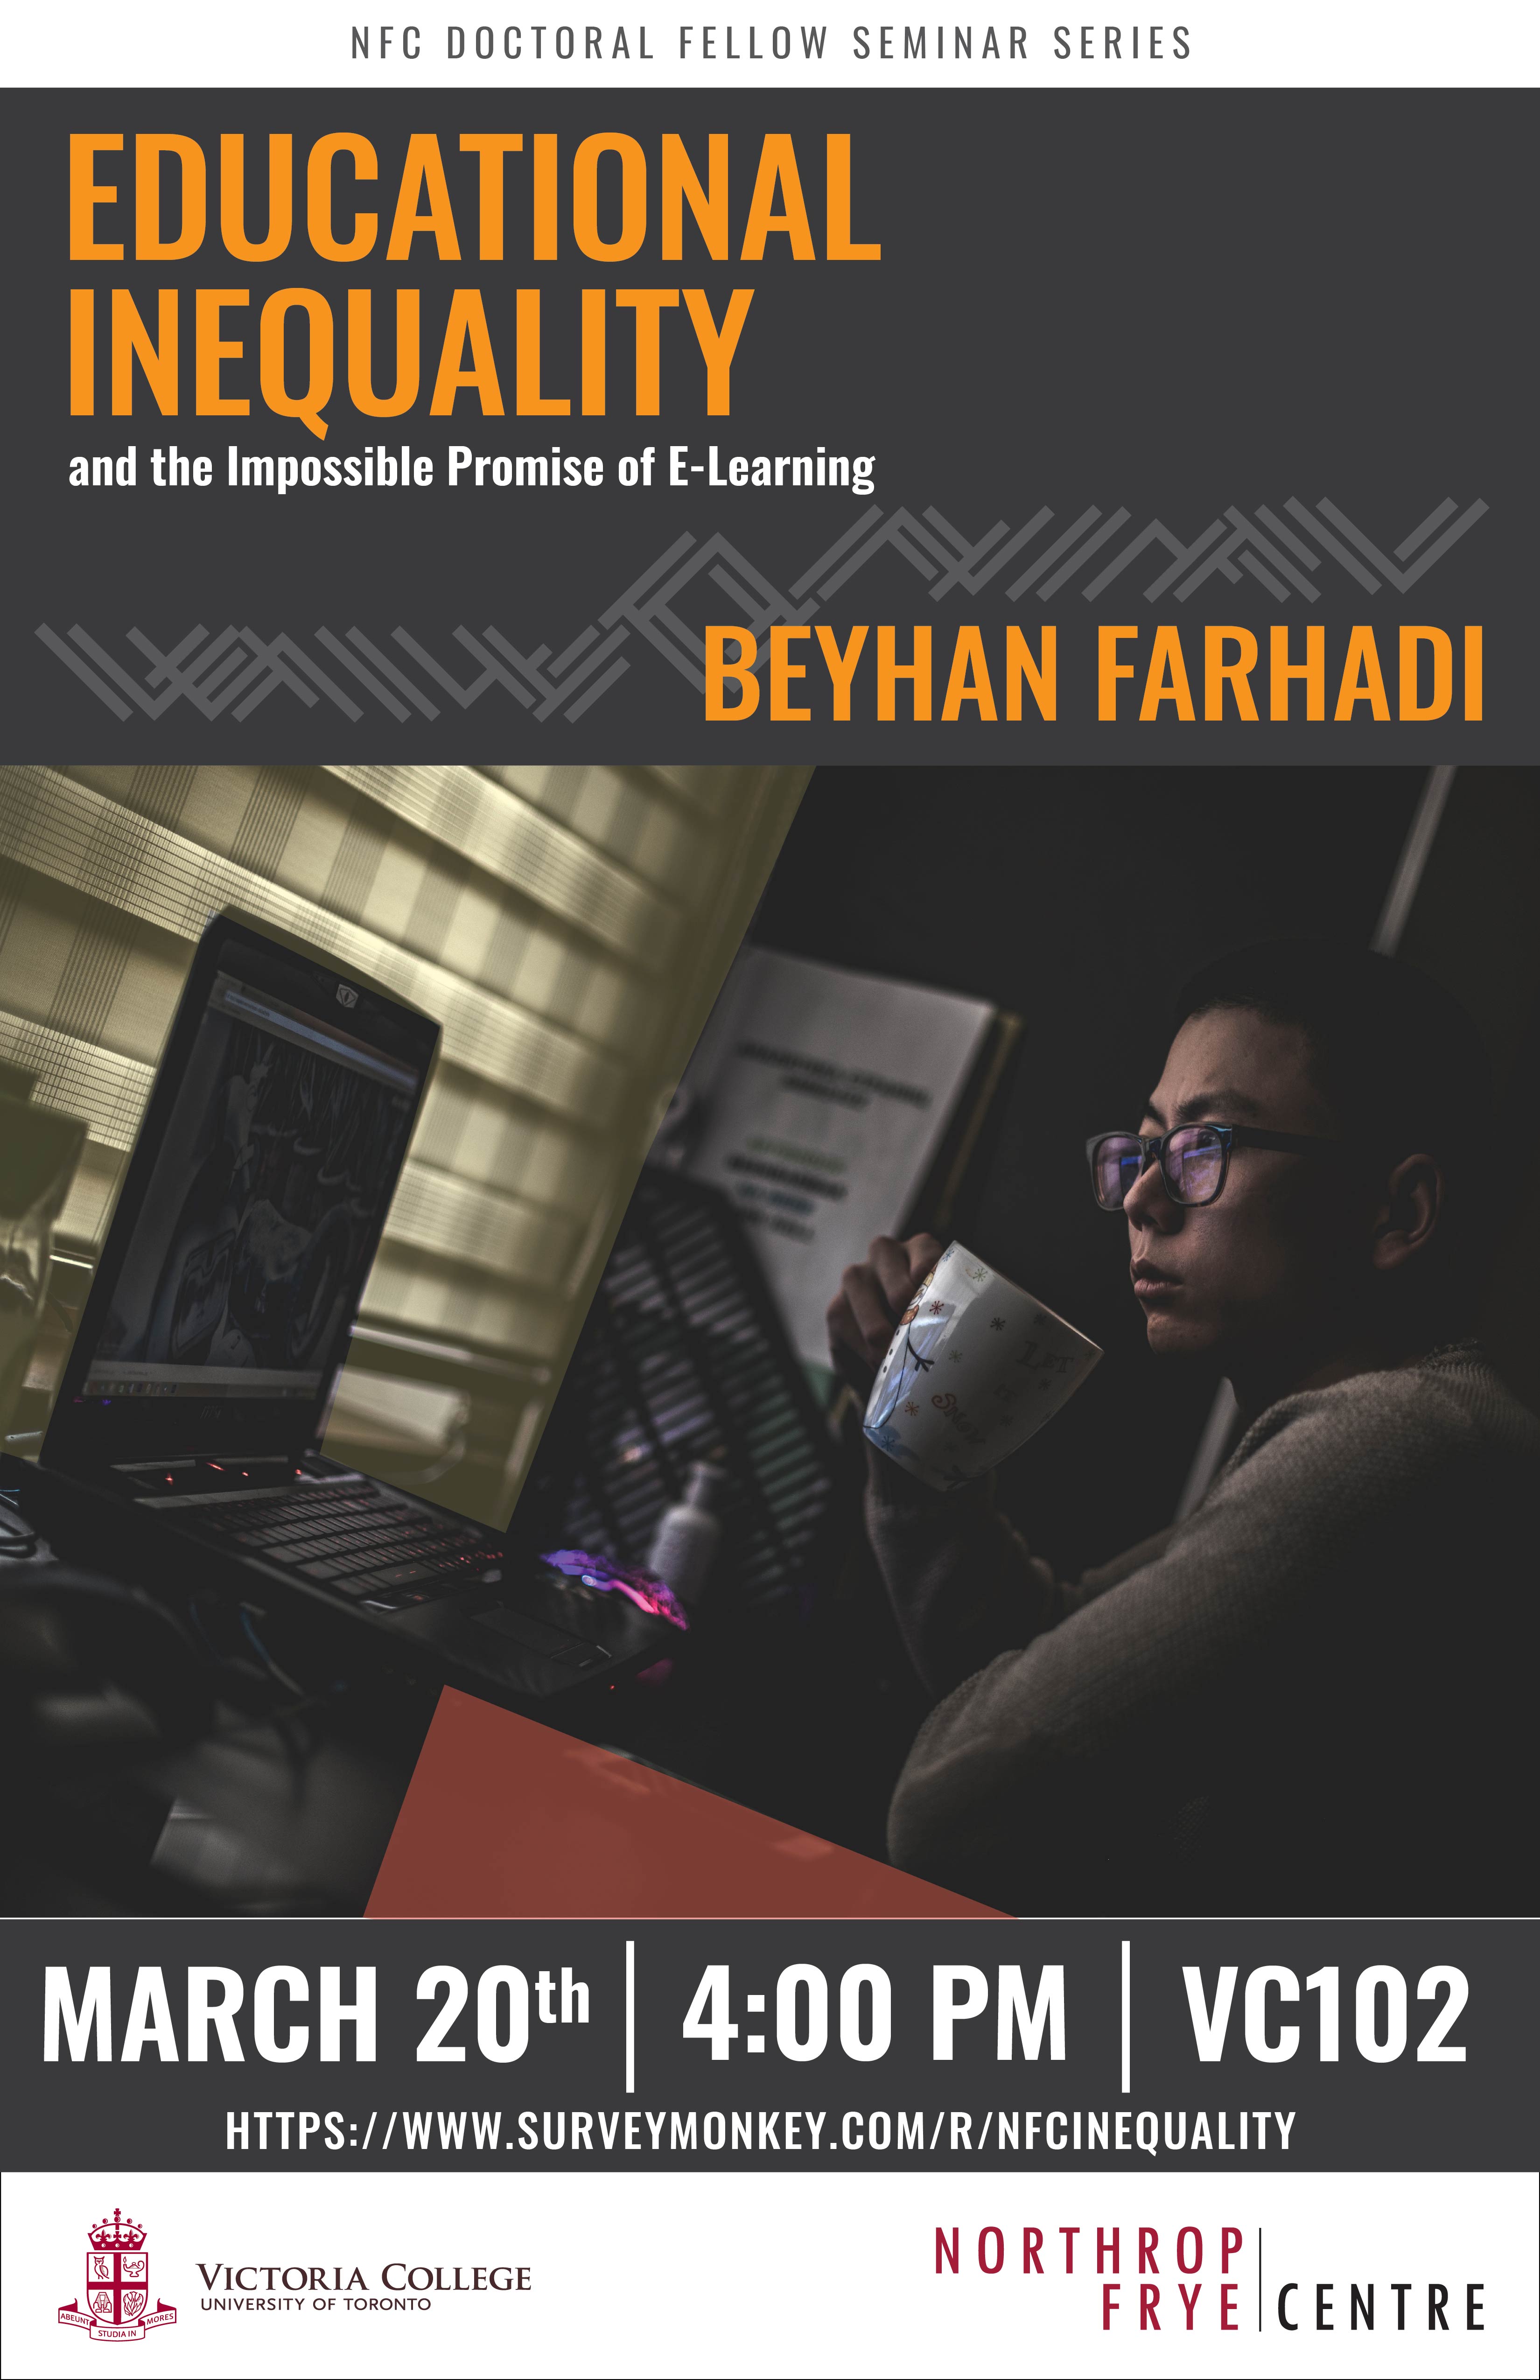 Mar. 20, 2018 | Education Inequality | Beyhan Farhadi